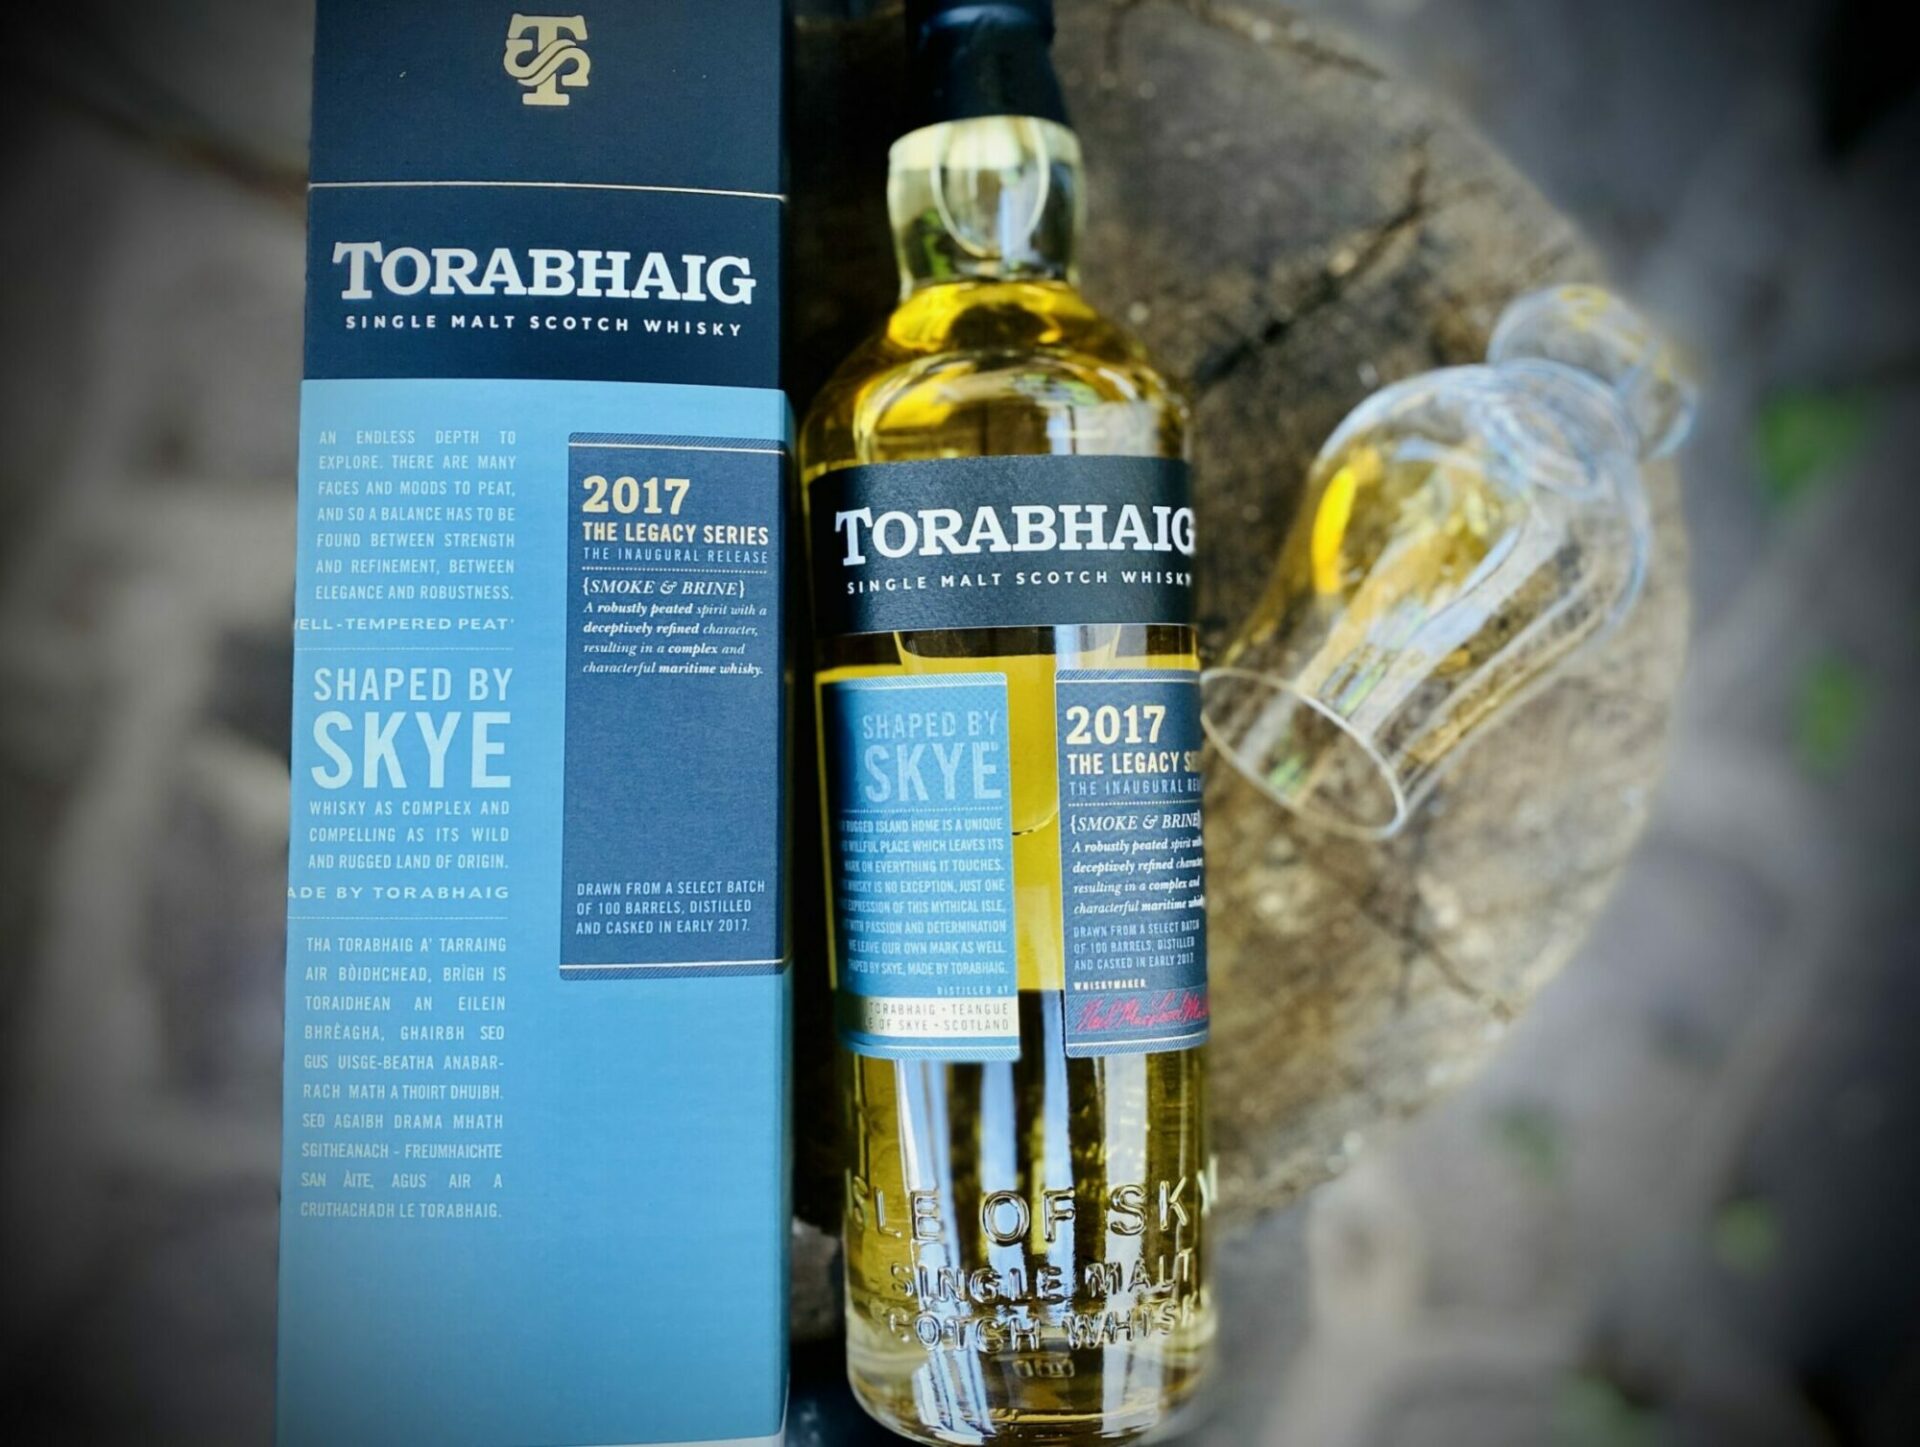 Torabhaig 2017 The Legacy Series - Single Malt Scotch Whisky